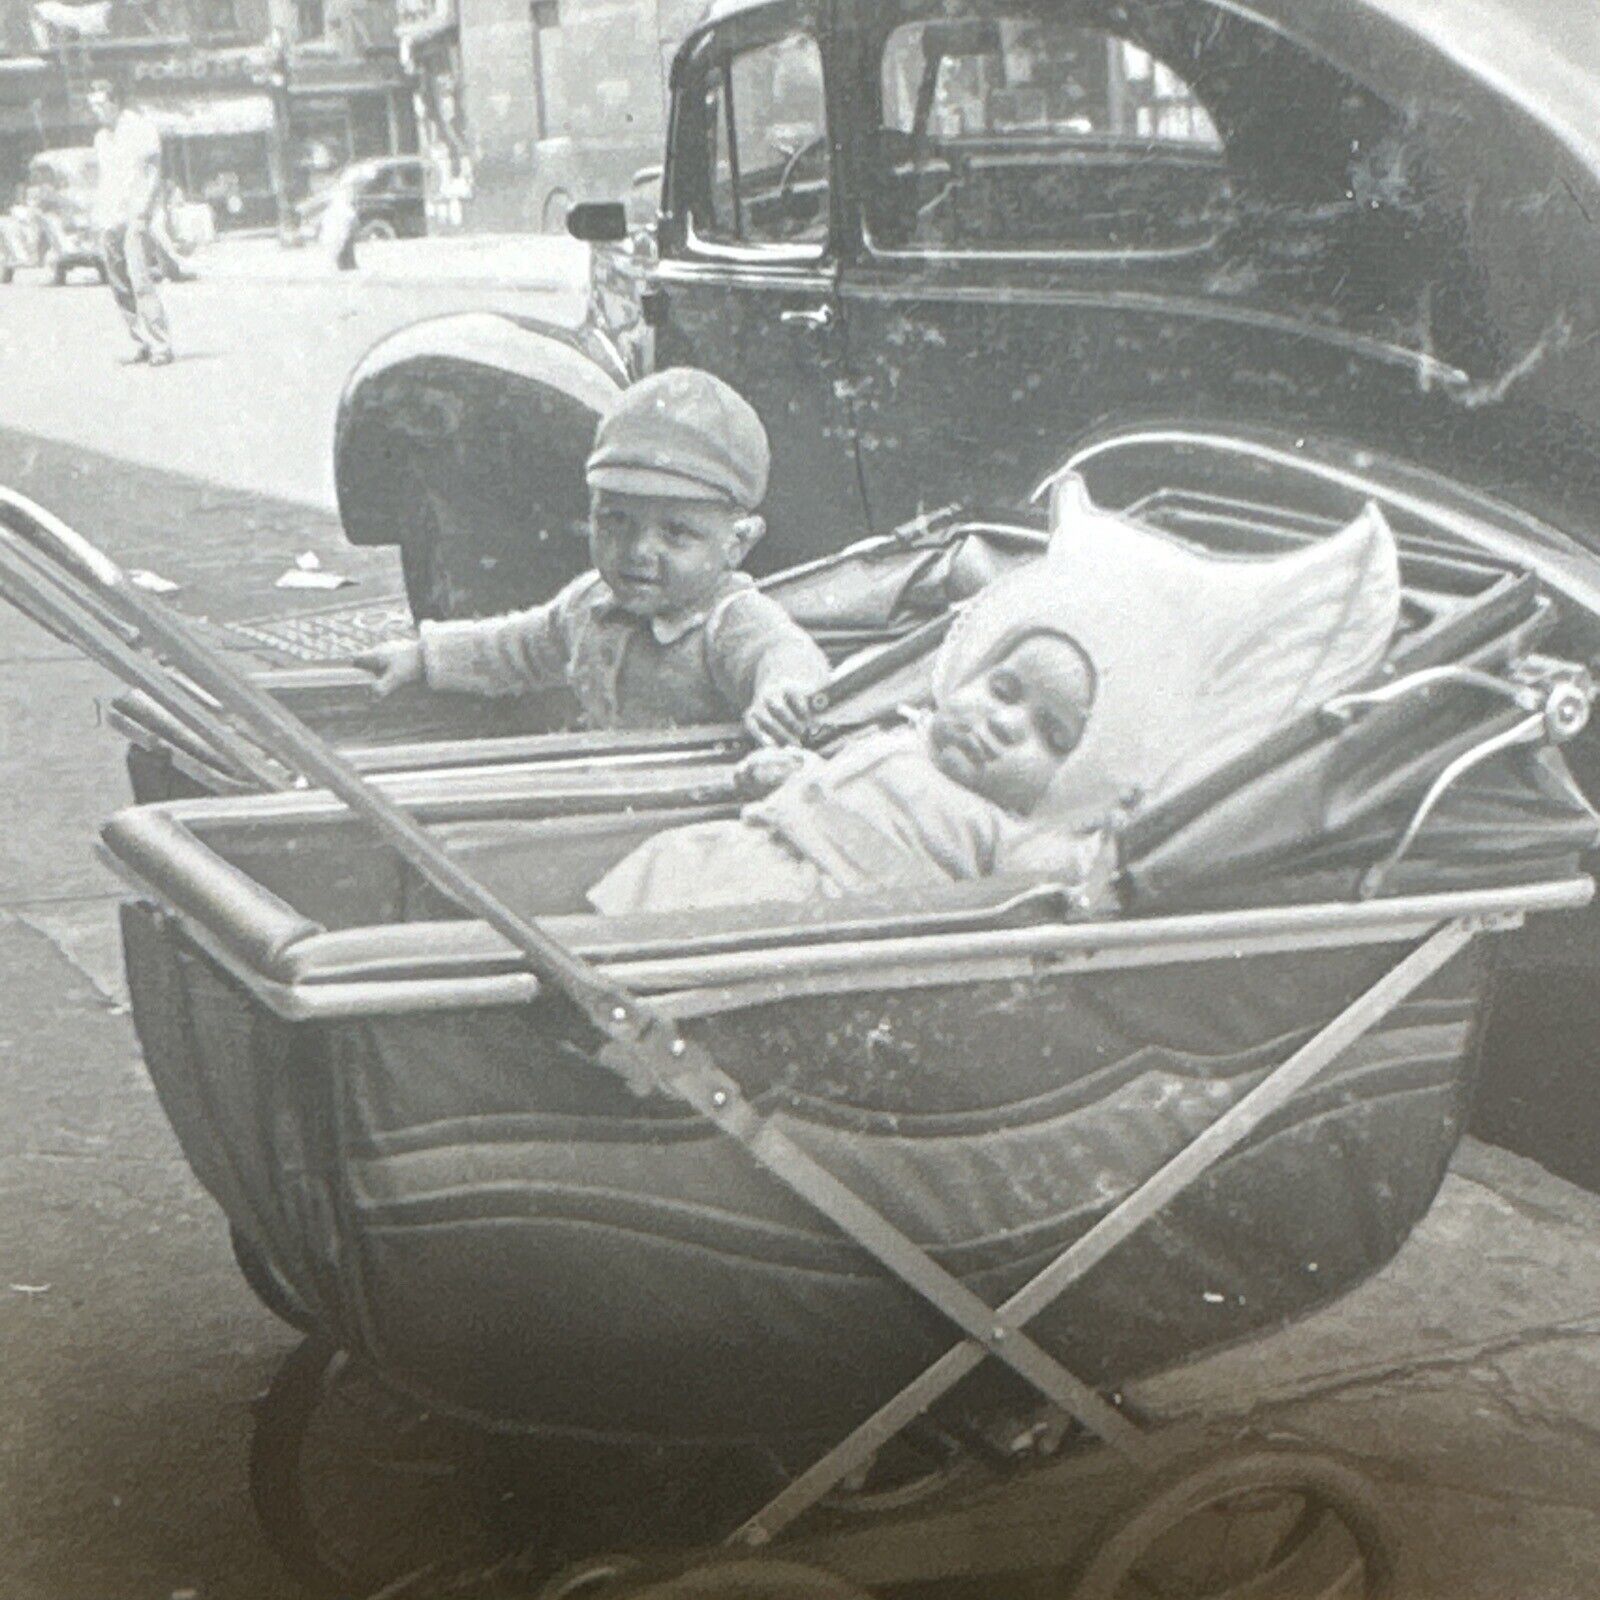 VINTAGE PHOTO 1948 Fat baby in a Carriage street scene kids ORIGINAL SNAPSHOT